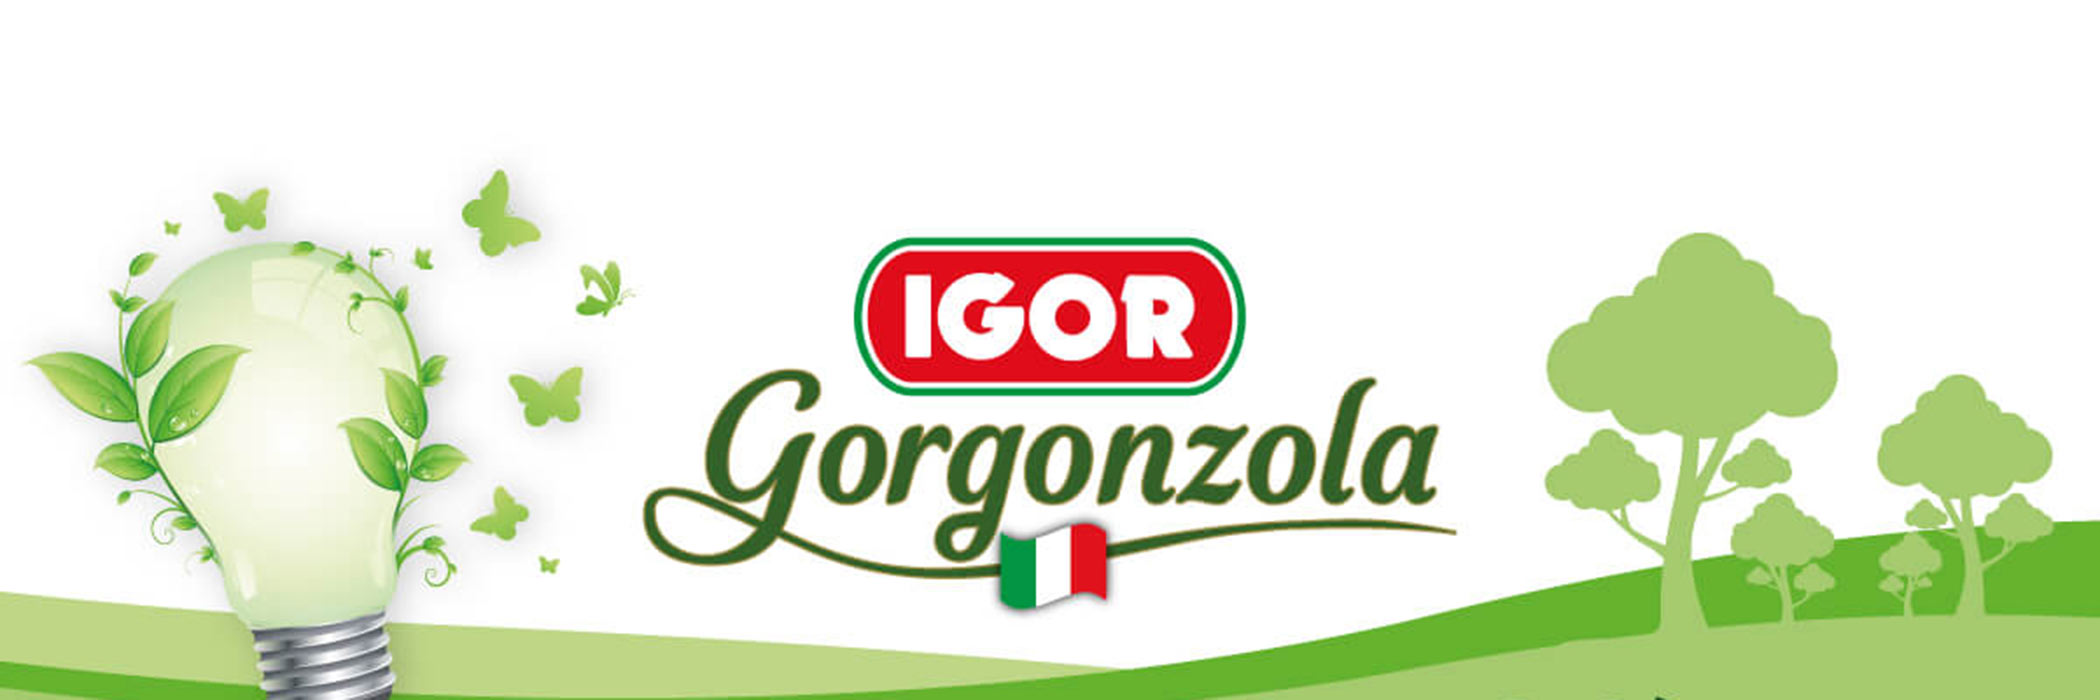 igor-gorgonzola.jpg